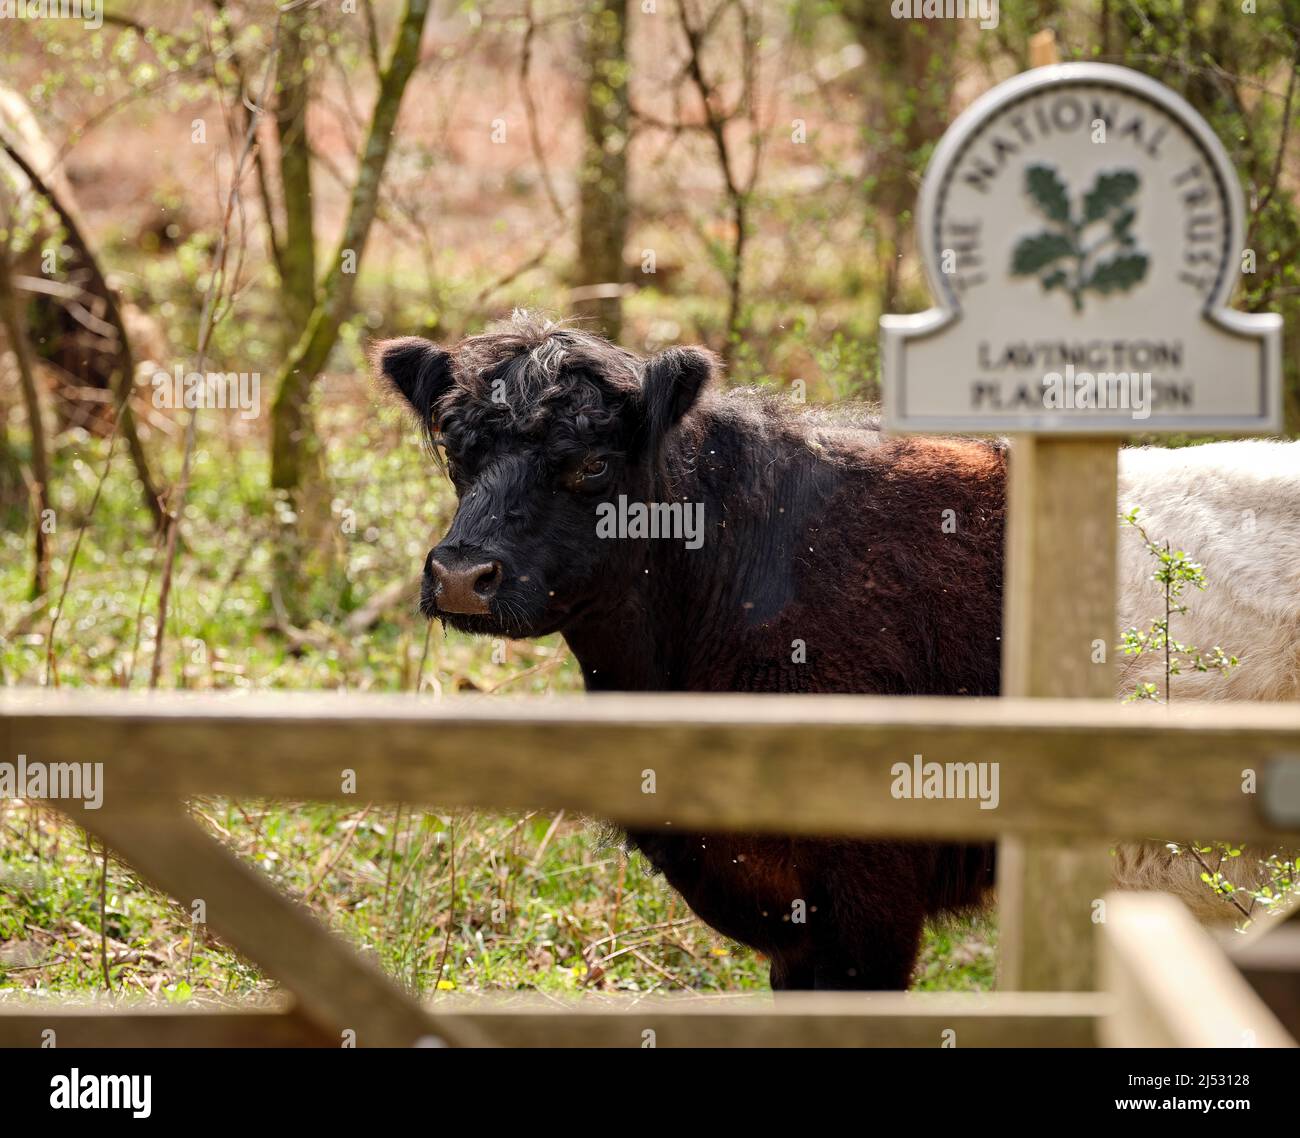 Cattle grazing the National Trust Lavington Plantation near Graffham, West Sussex, UK Stock Photo